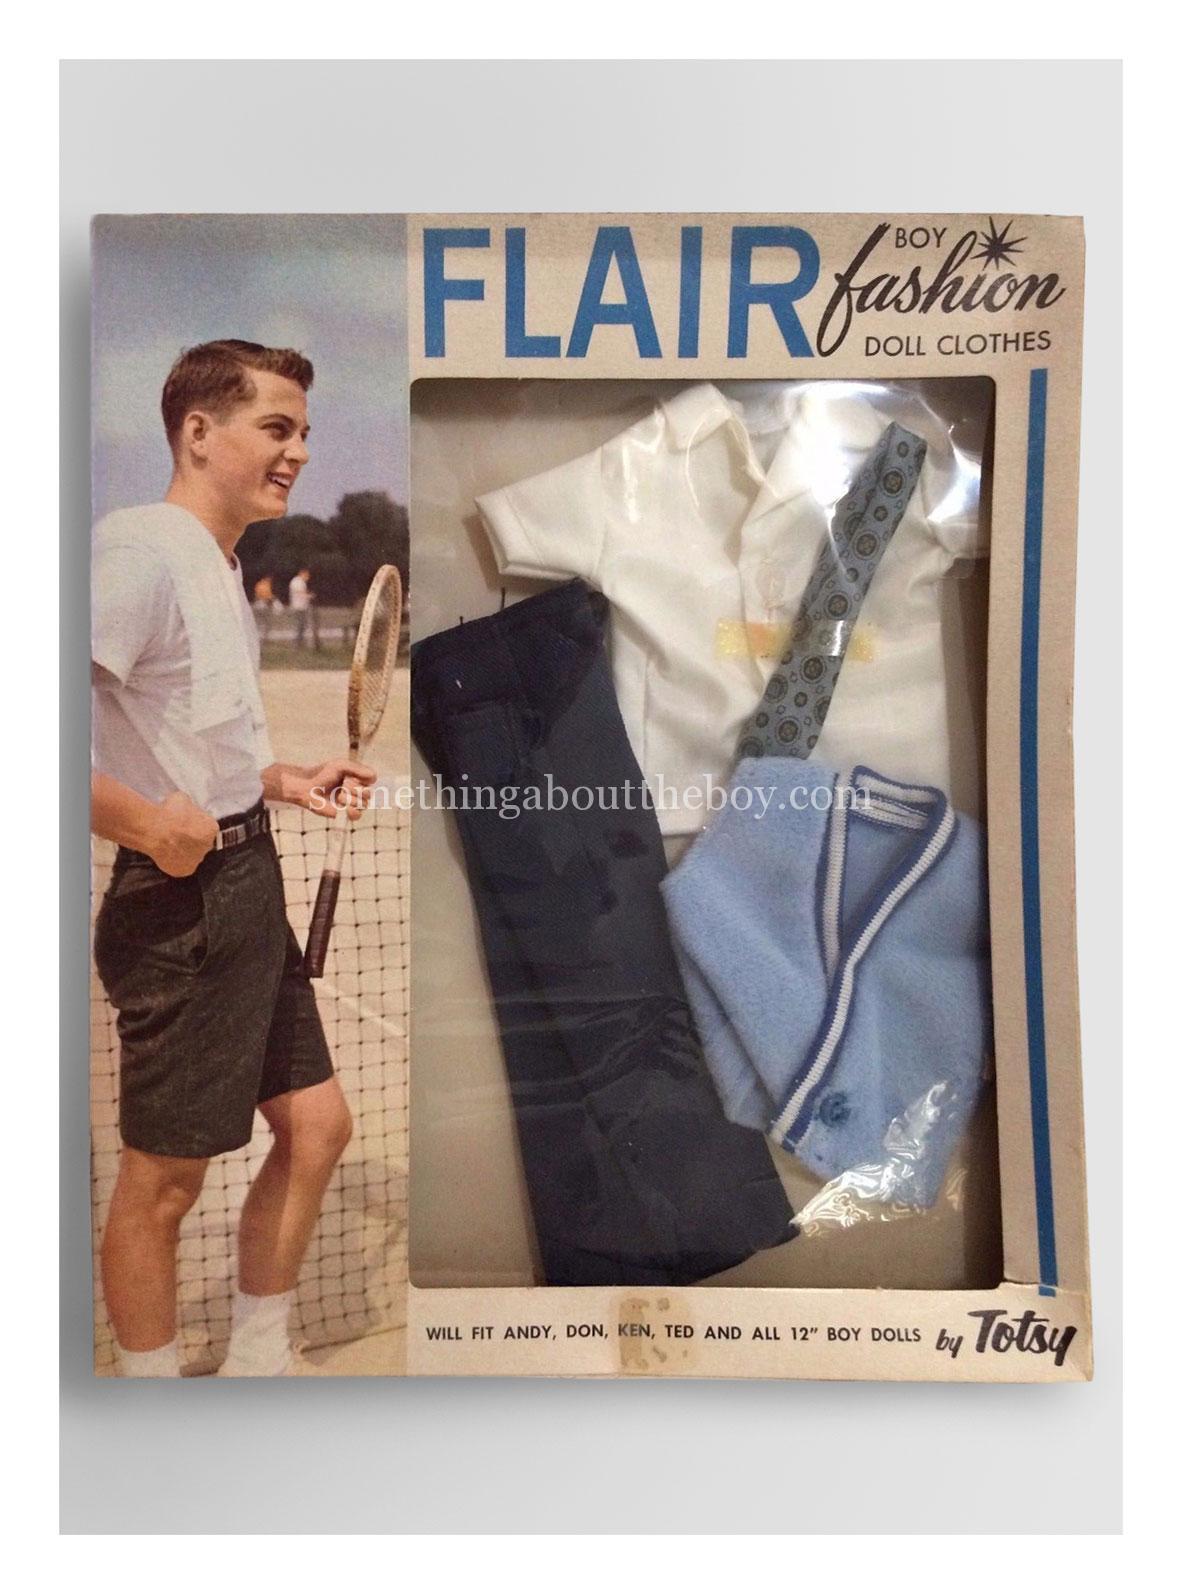 Flair Boy Fashion Doll Clothes by Totsy